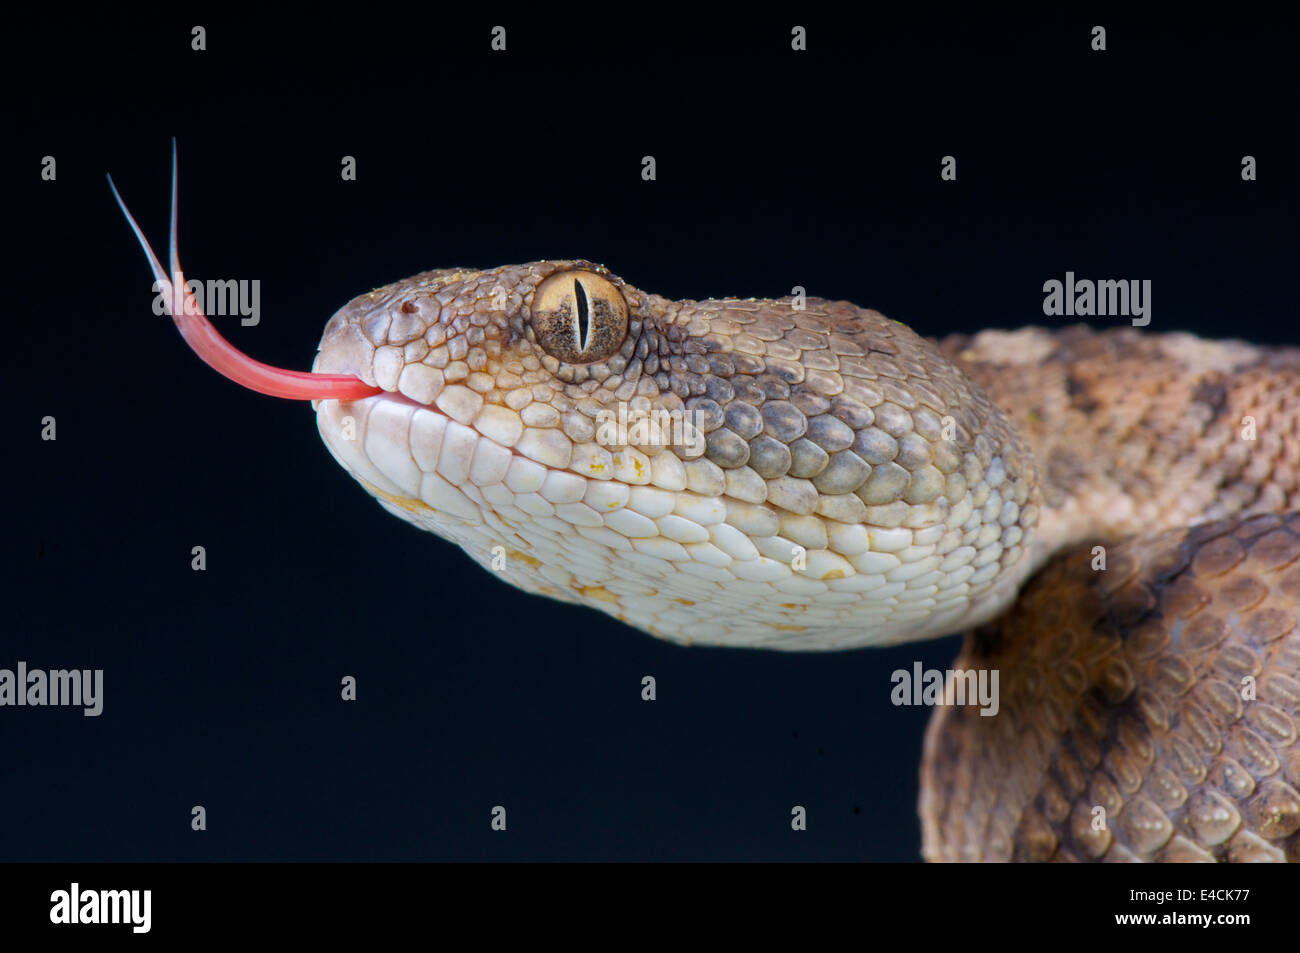 Oman saw-scaled viper / Echis omanensis Stock Photo